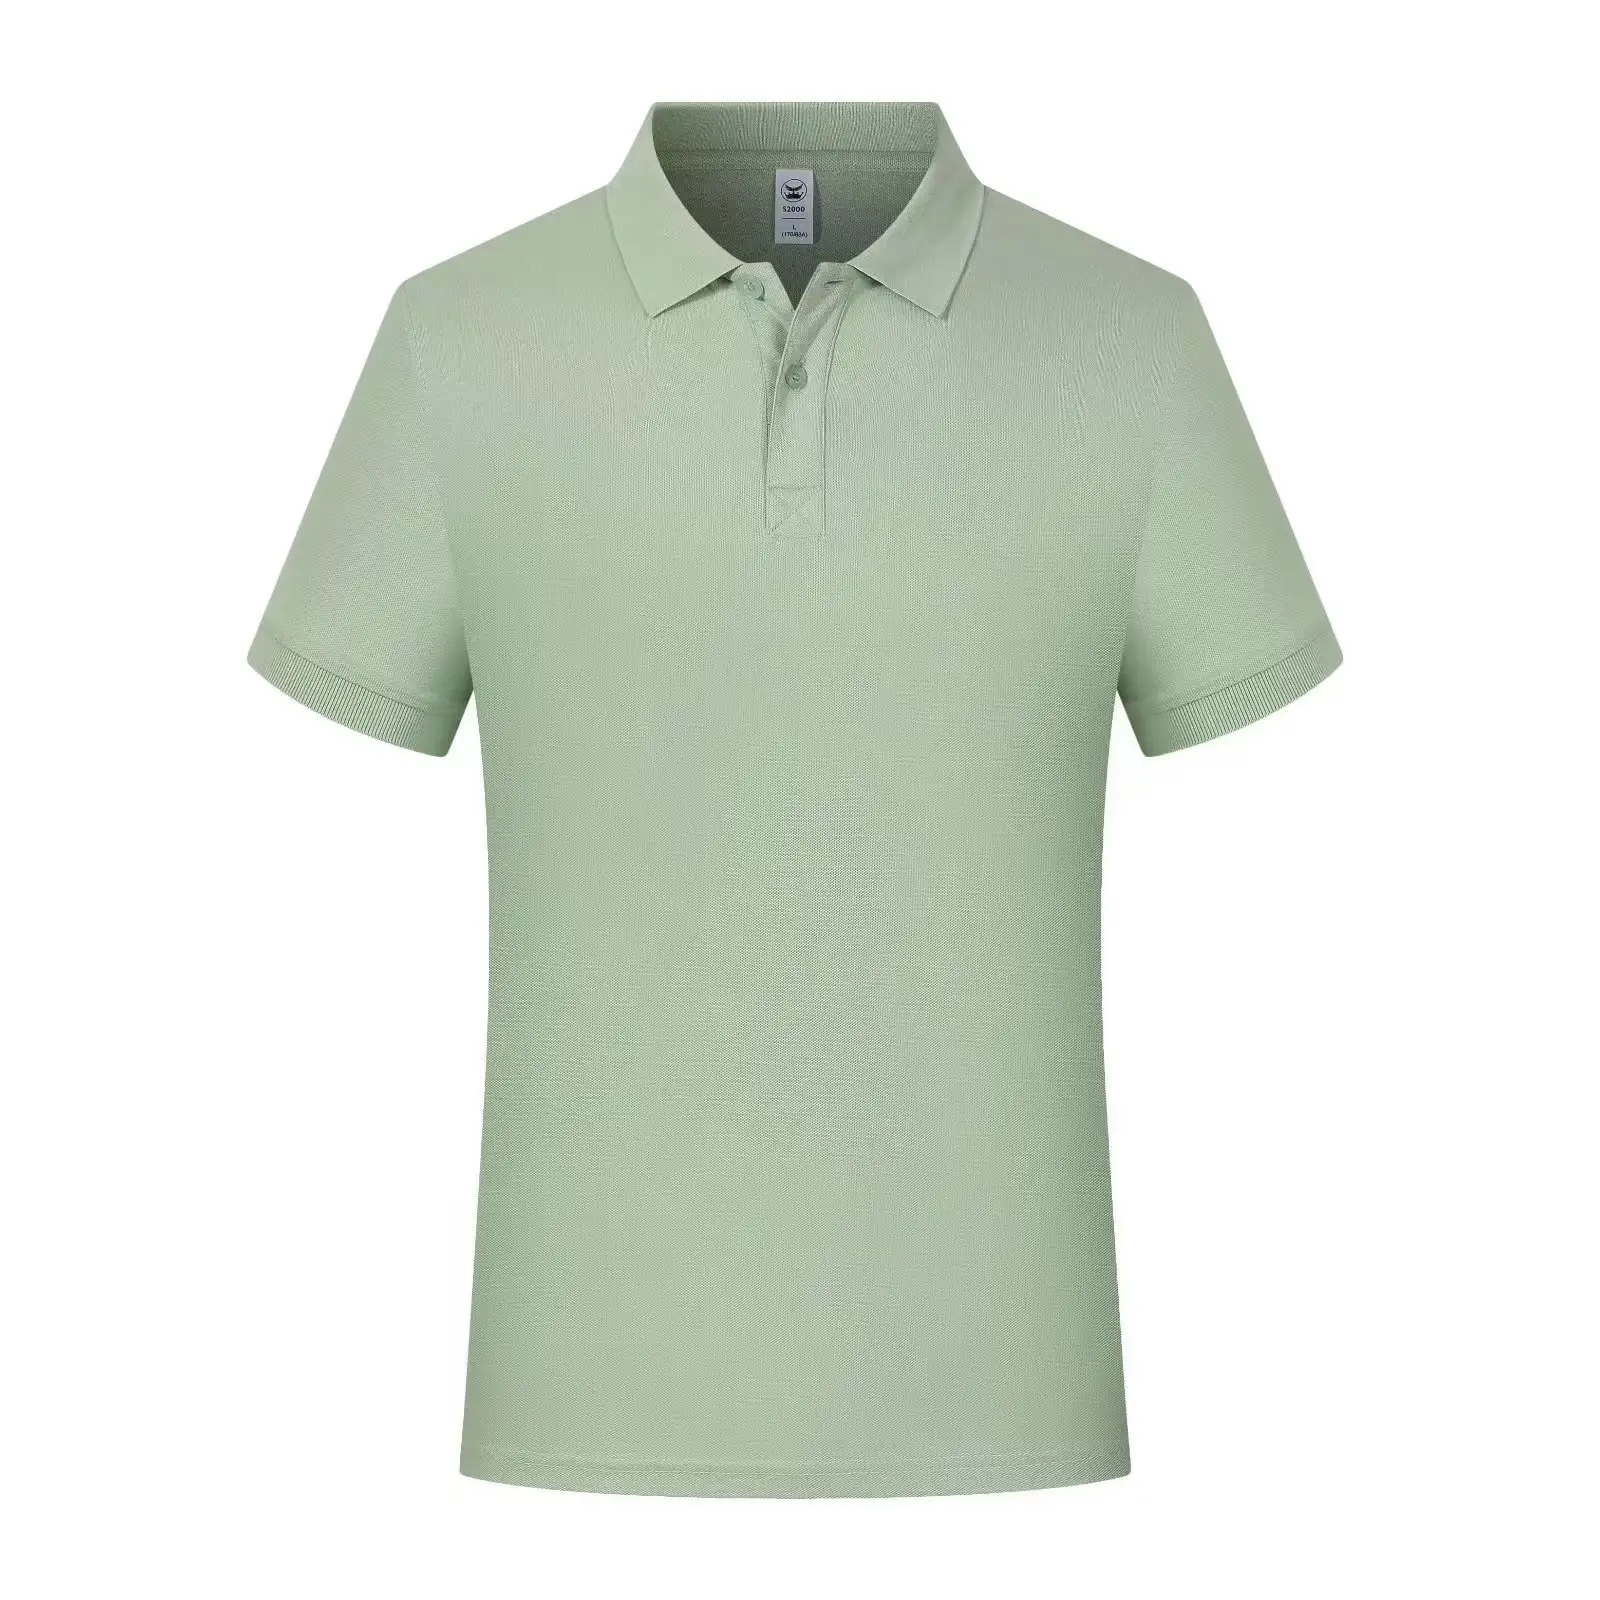 OEM Wholesale Unisex polo t shirts men cotton custom polo shirts short sleeve polo shirts high quality